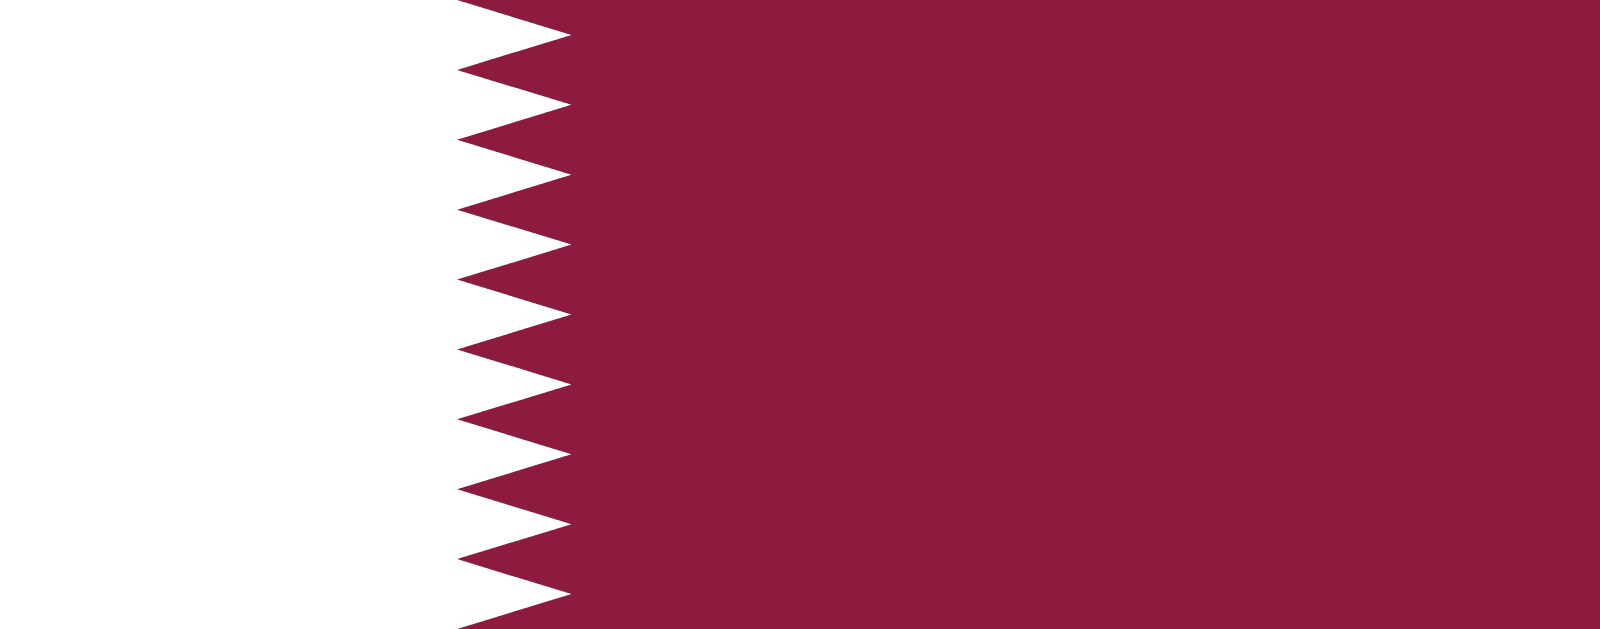 F1 Katar